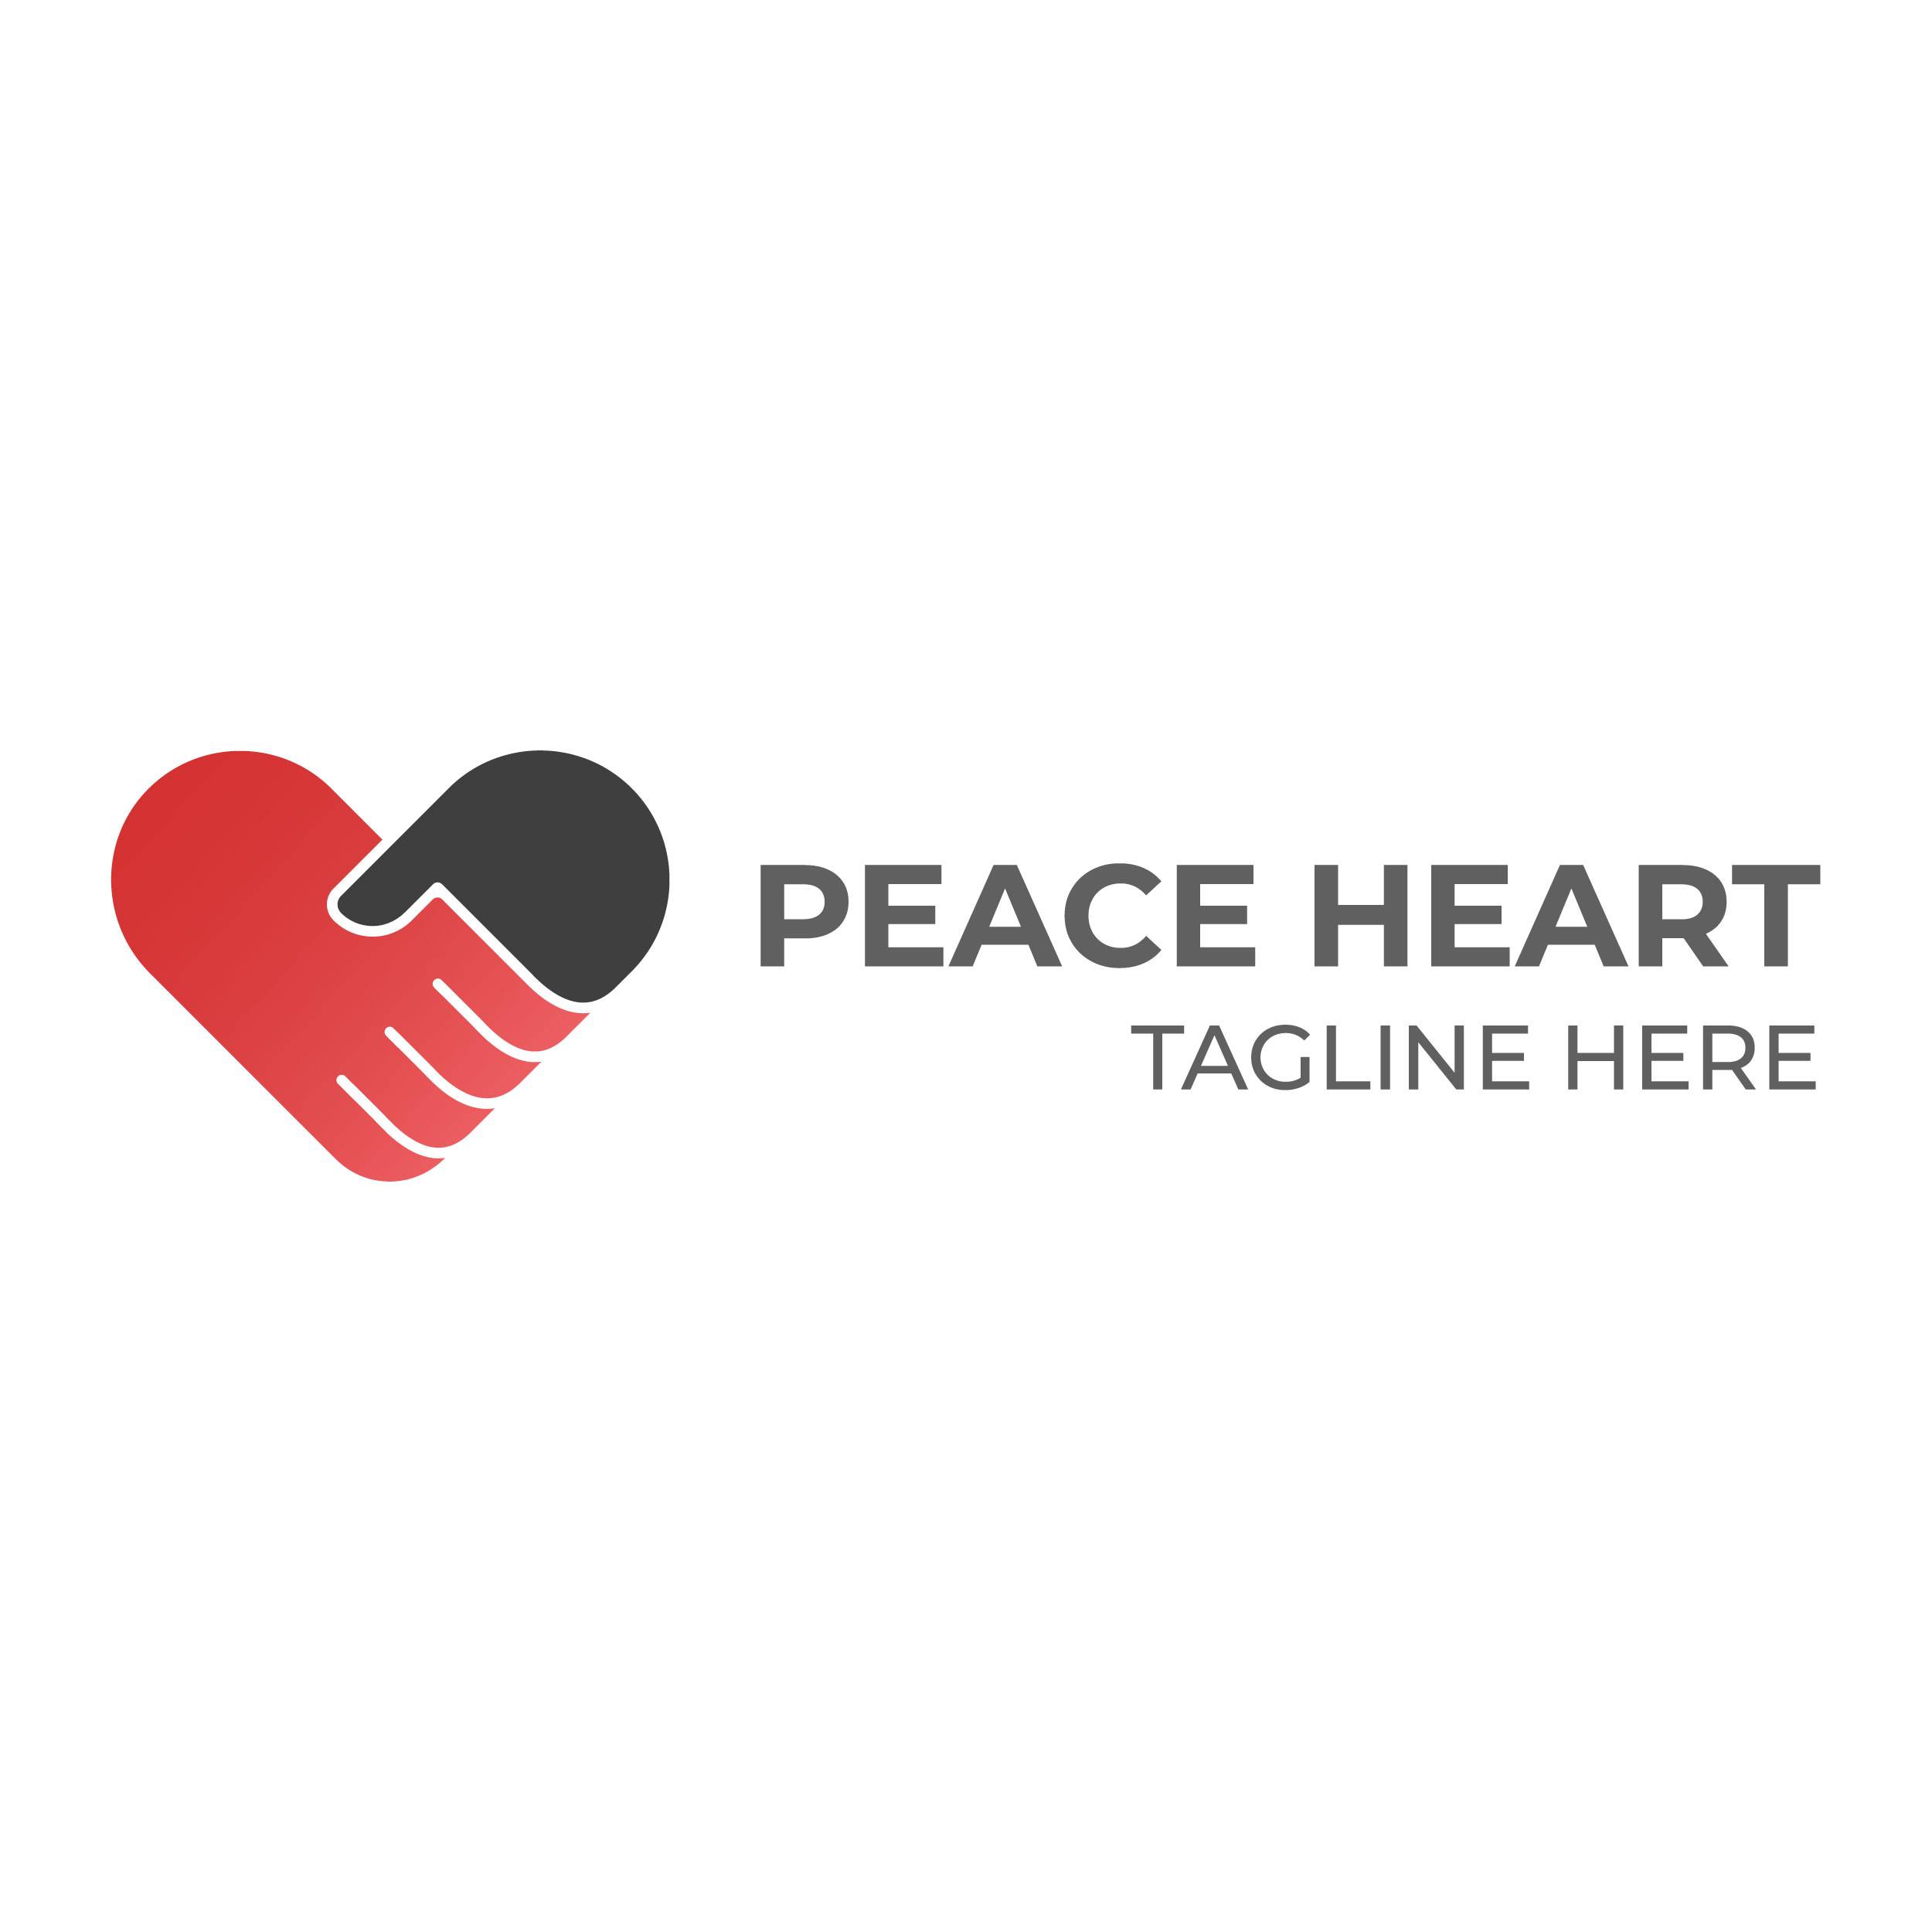 Heart shape logo with hand shaking